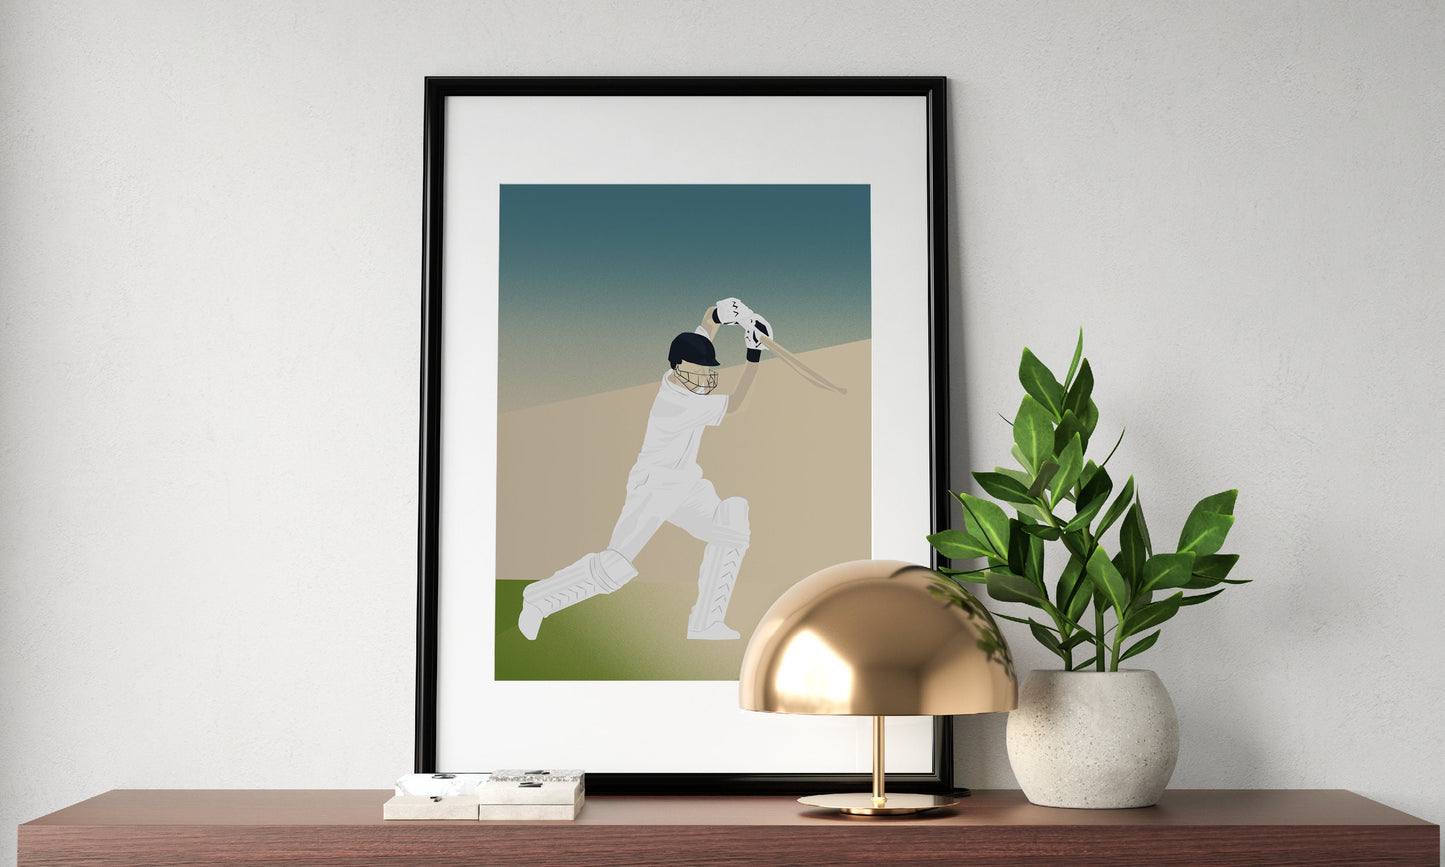 Affiche Cricket "Cover Drive"